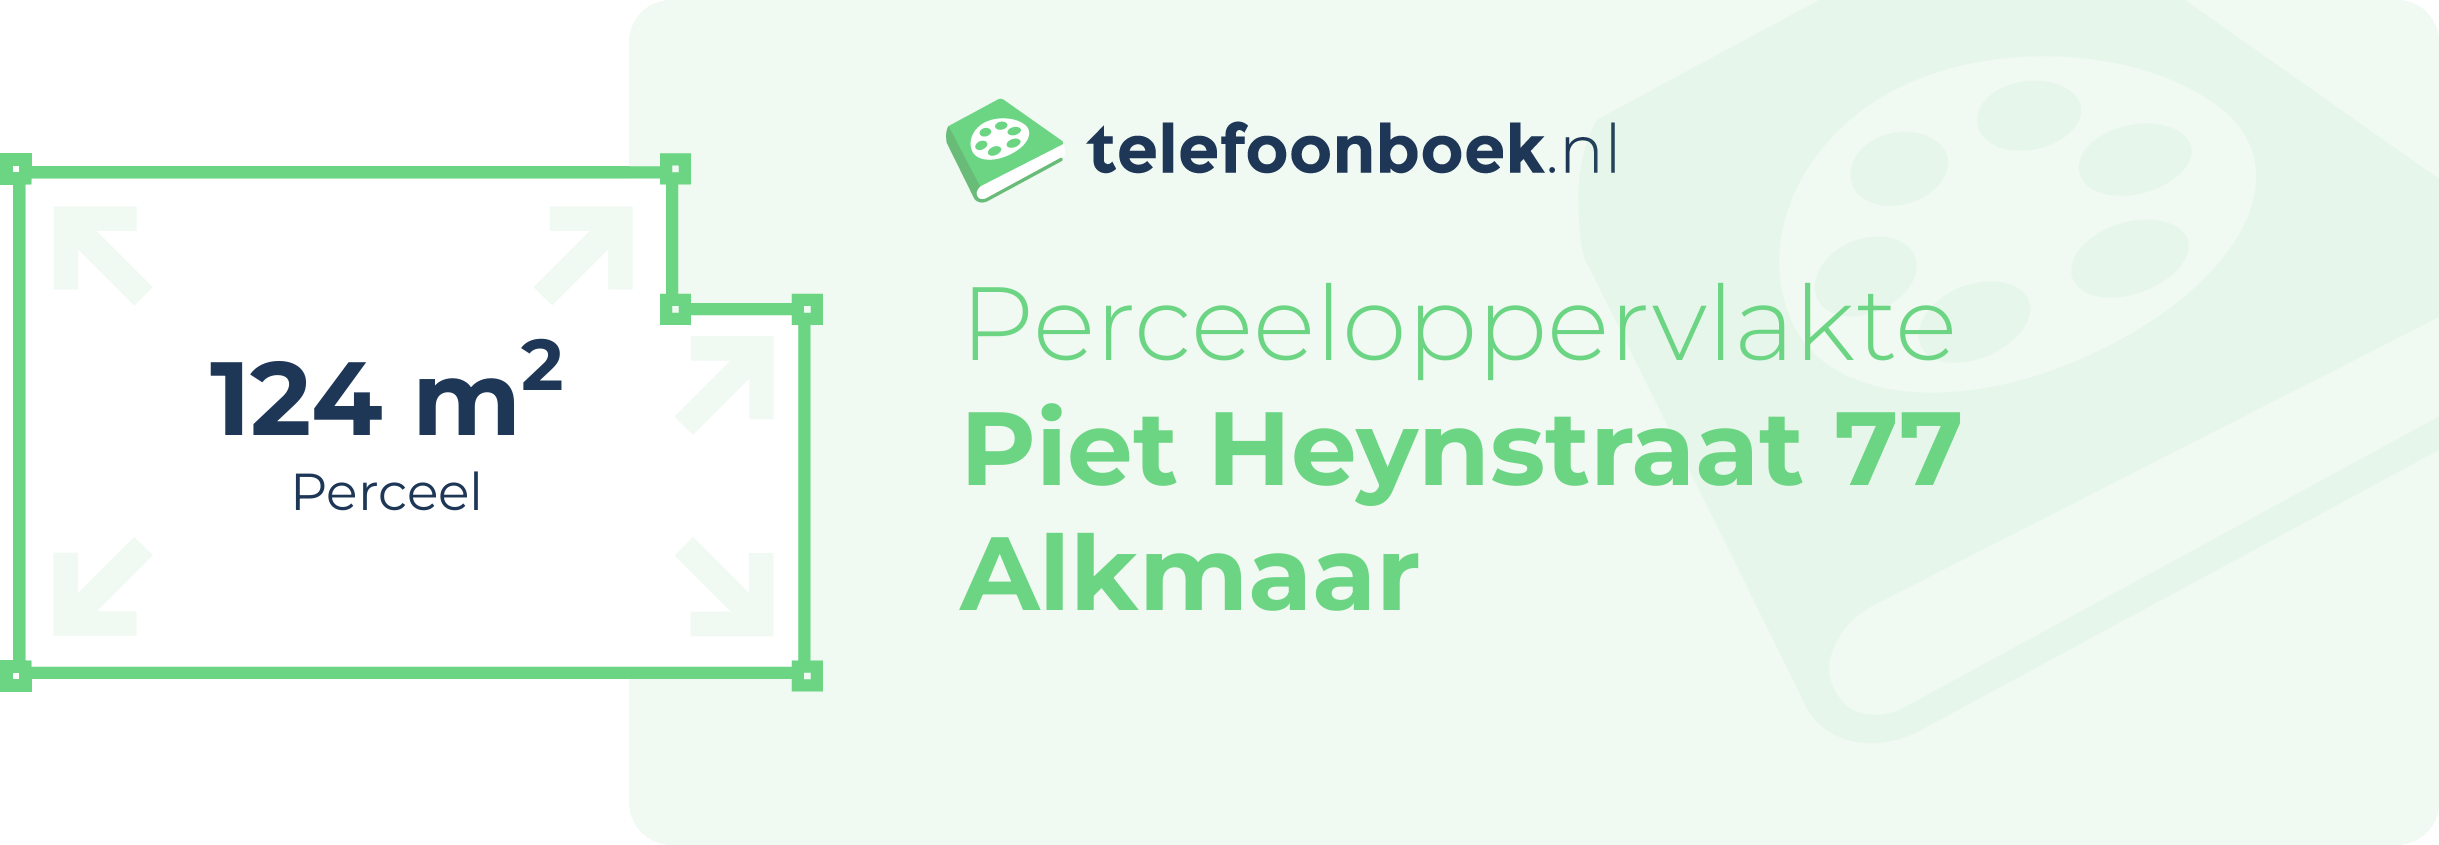 Perceeloppervlakte Piet Heynstraat 77 Alkmaar